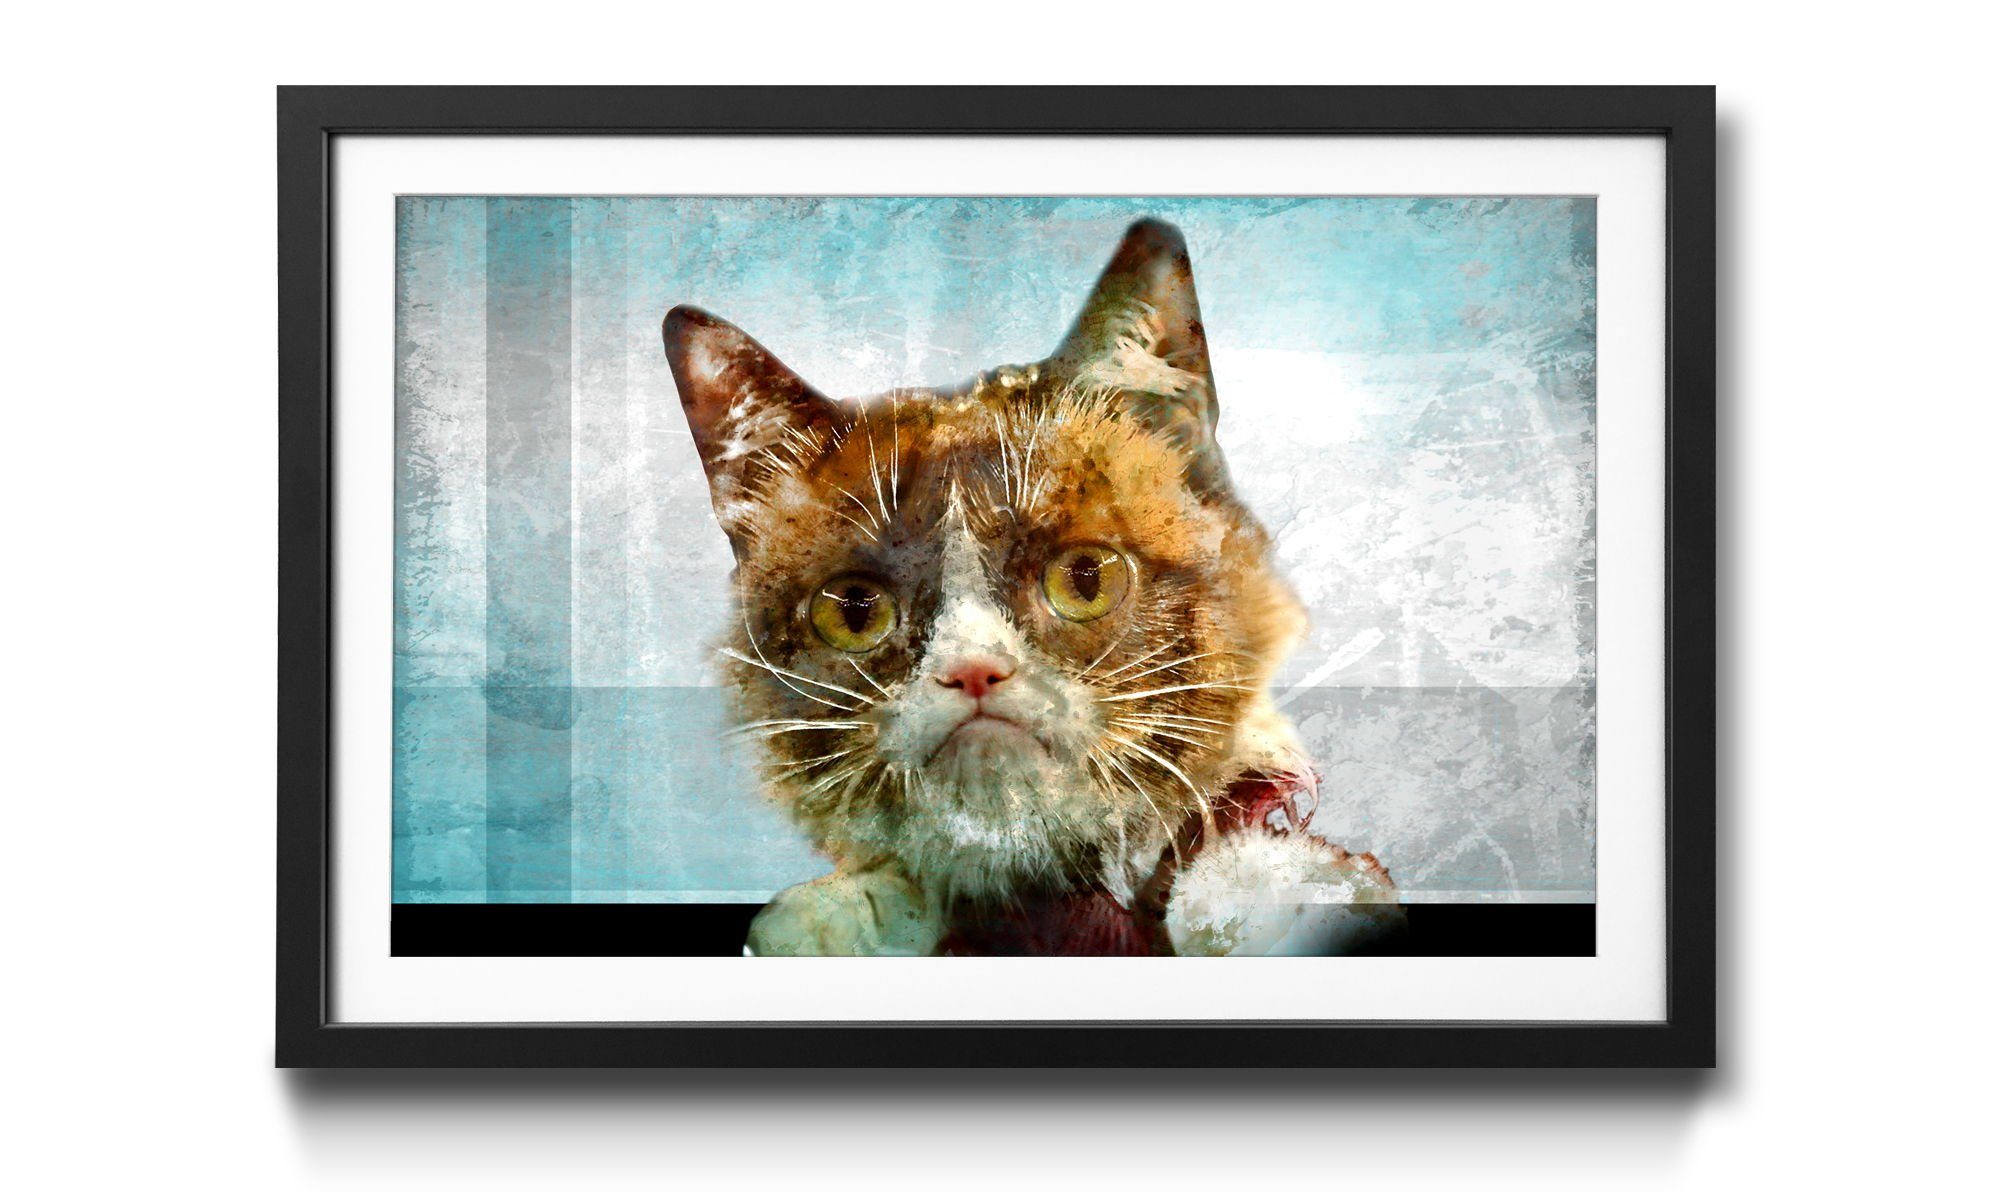 WandbilderXXL Kunstdruck El Grump, Katze, Wandbild, in 4 Größen erhältlich | Kunstdrucke